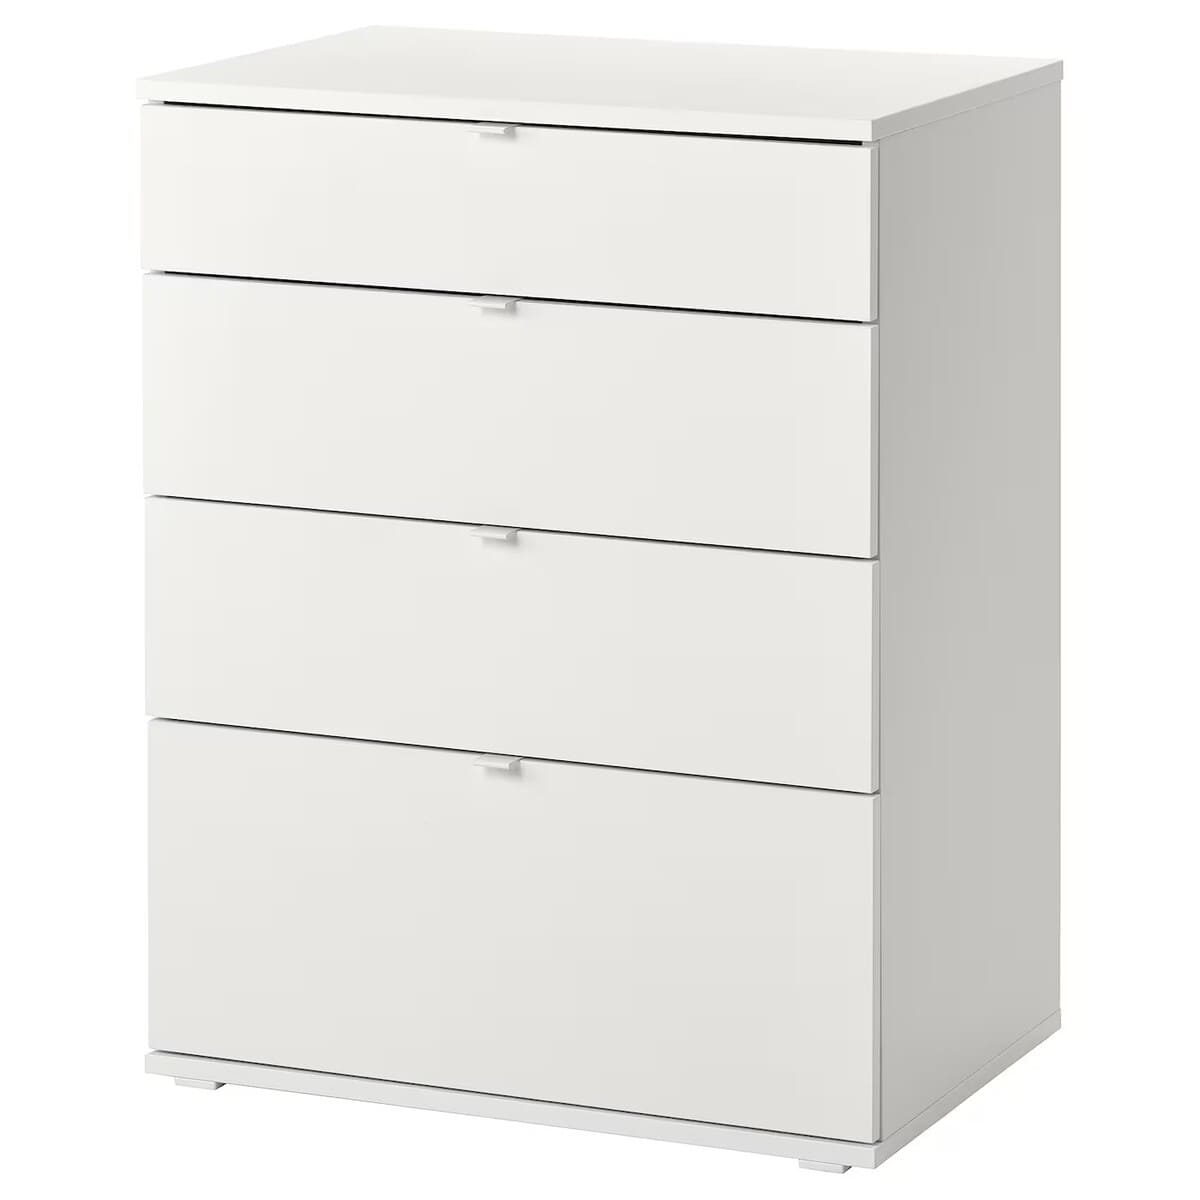 IKEA VIHALS 4-drawer chest